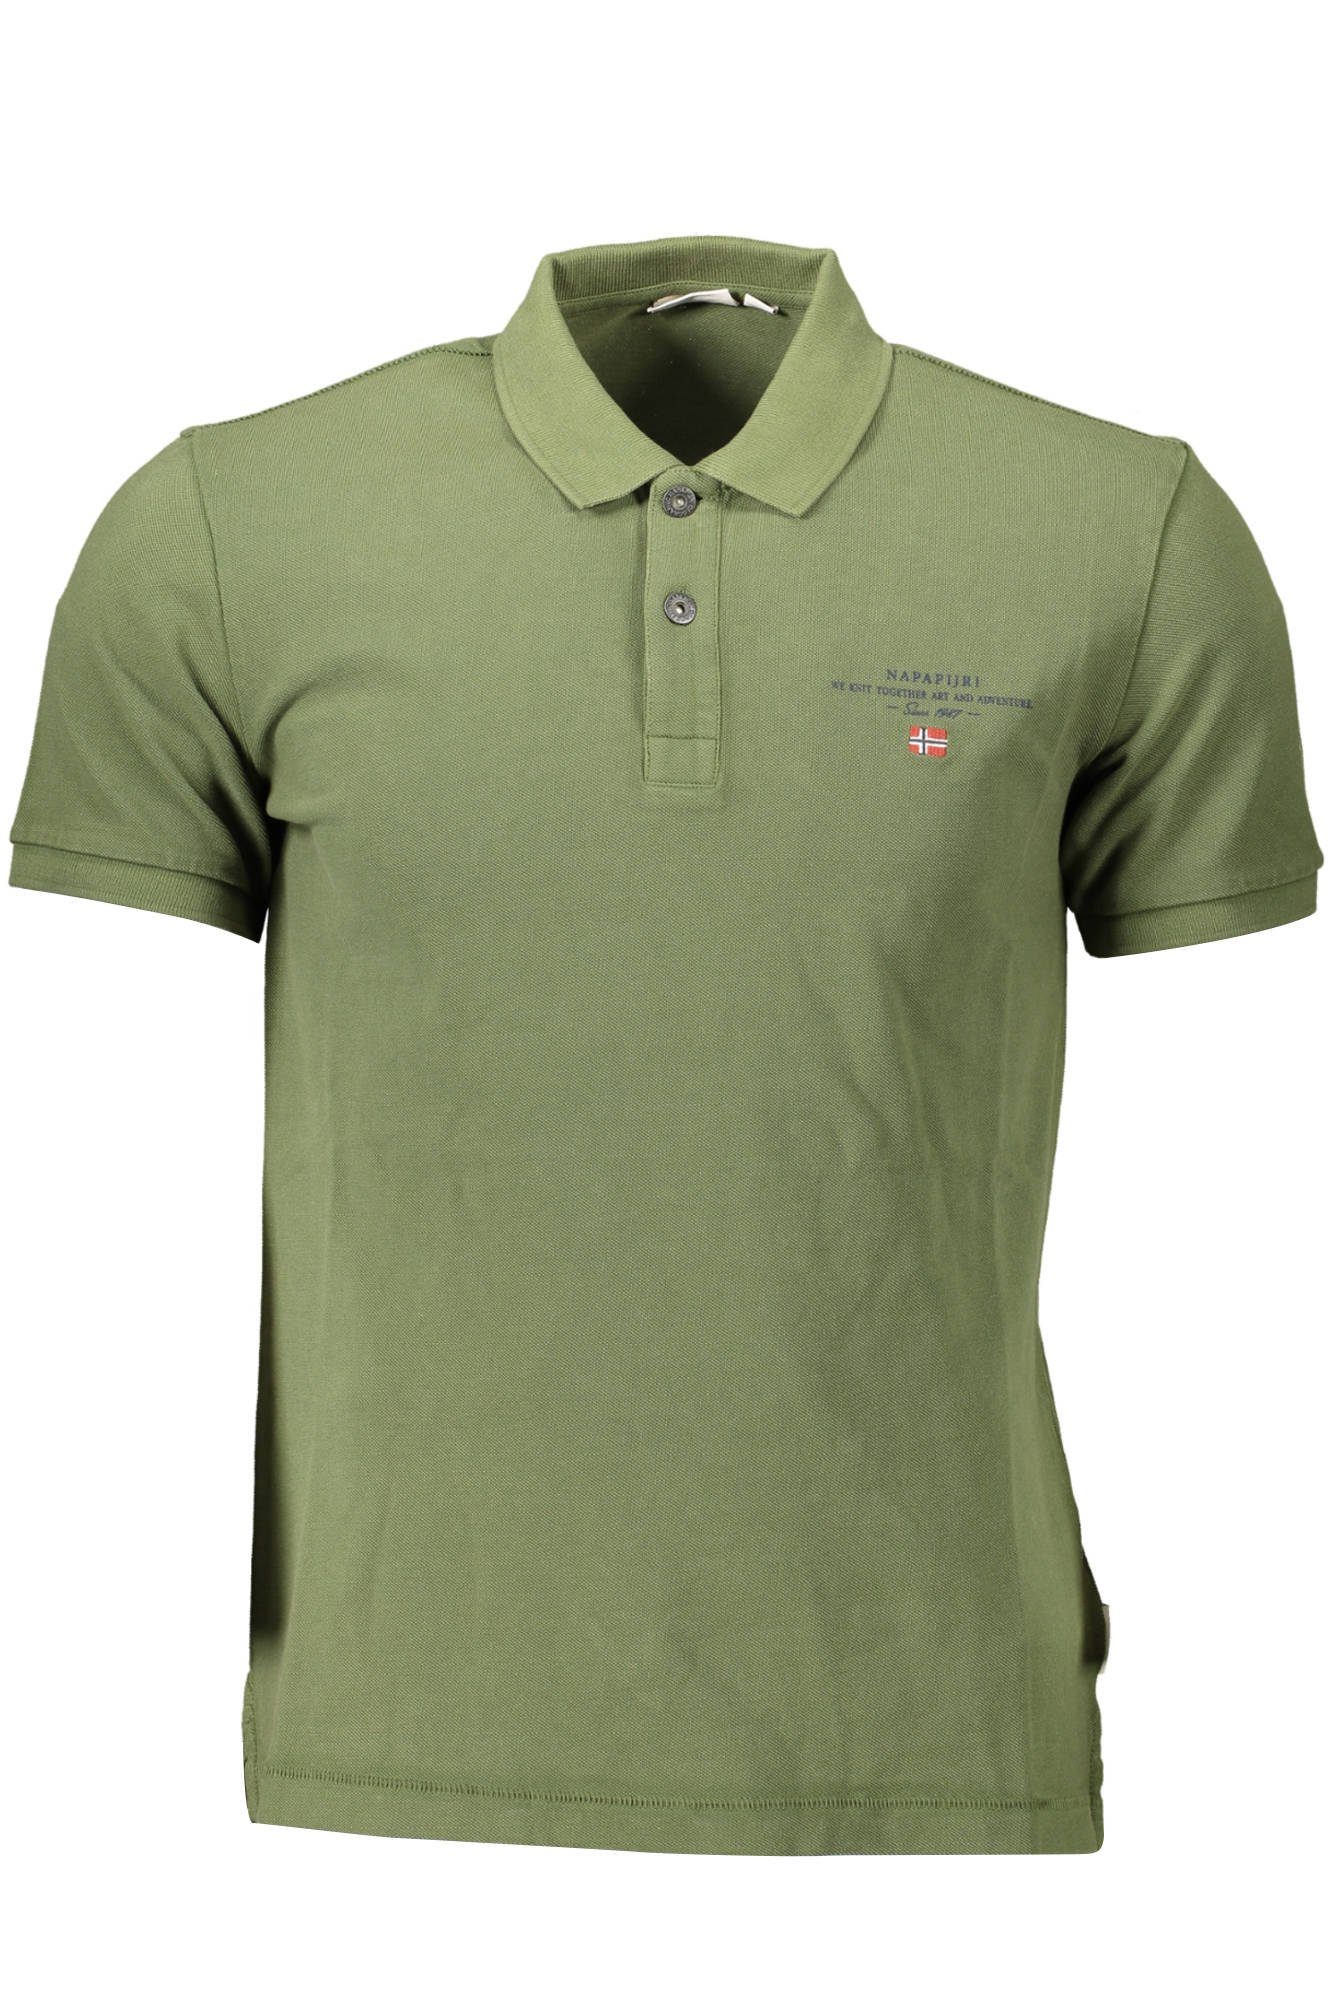 mit Poloshirt grün kurzarm, Napapijri Knöpfen Herren cypress) Napapijri (g2c green T-Shirt Poloshirt Polohemd